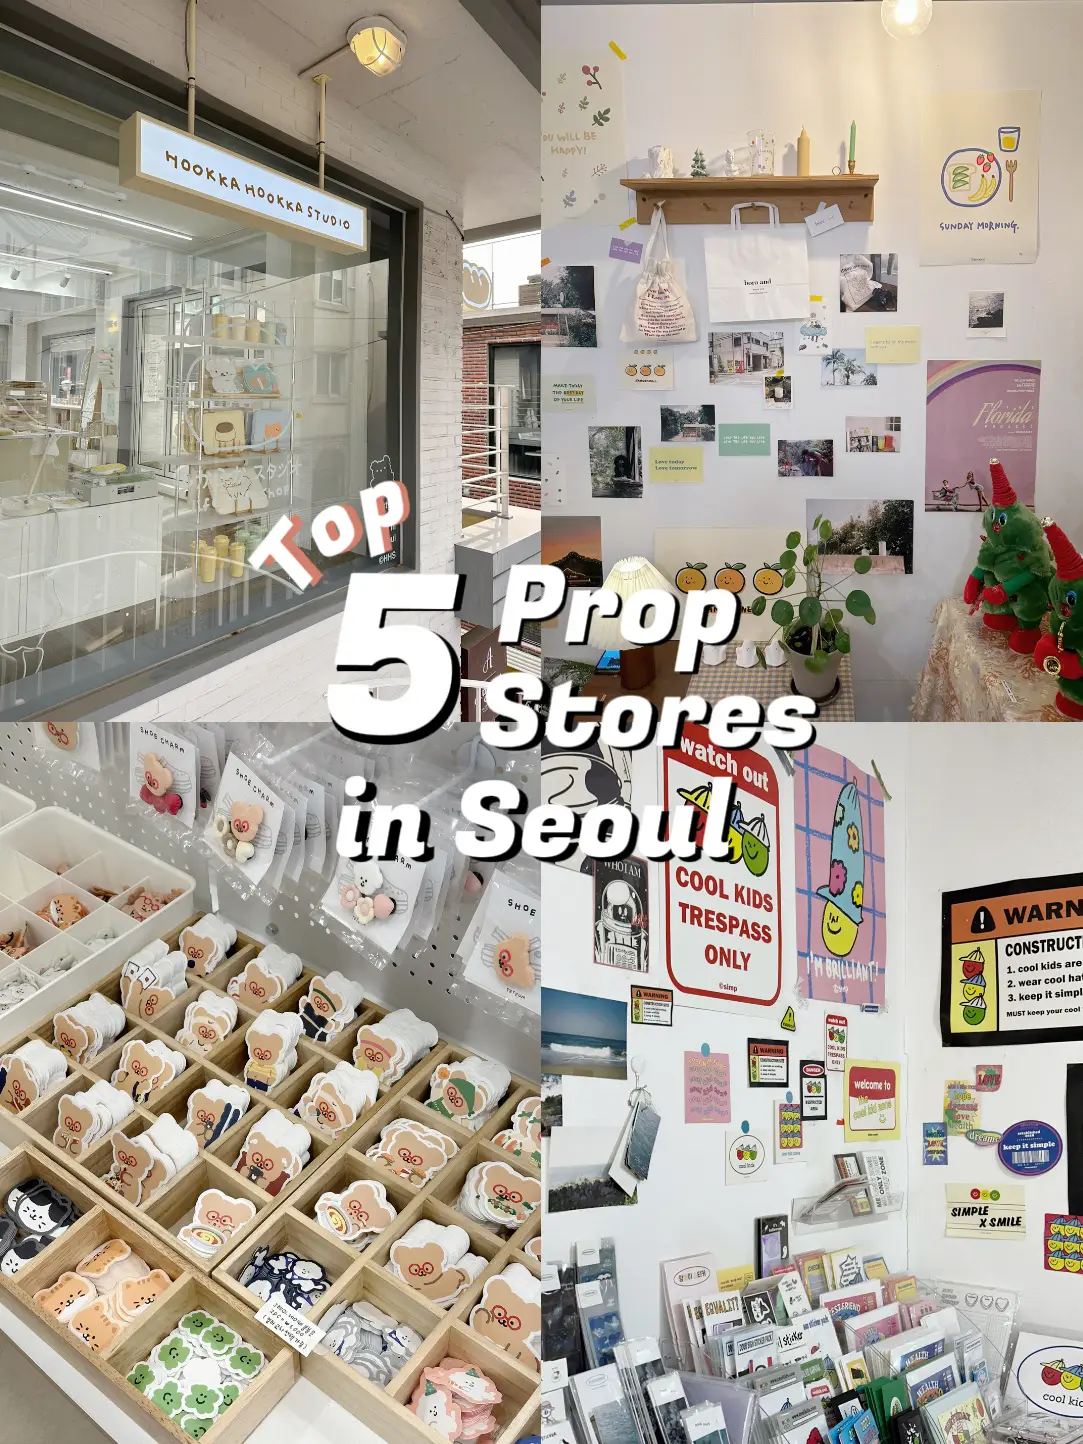 kpop merchandise cafe - Lemon8 Search